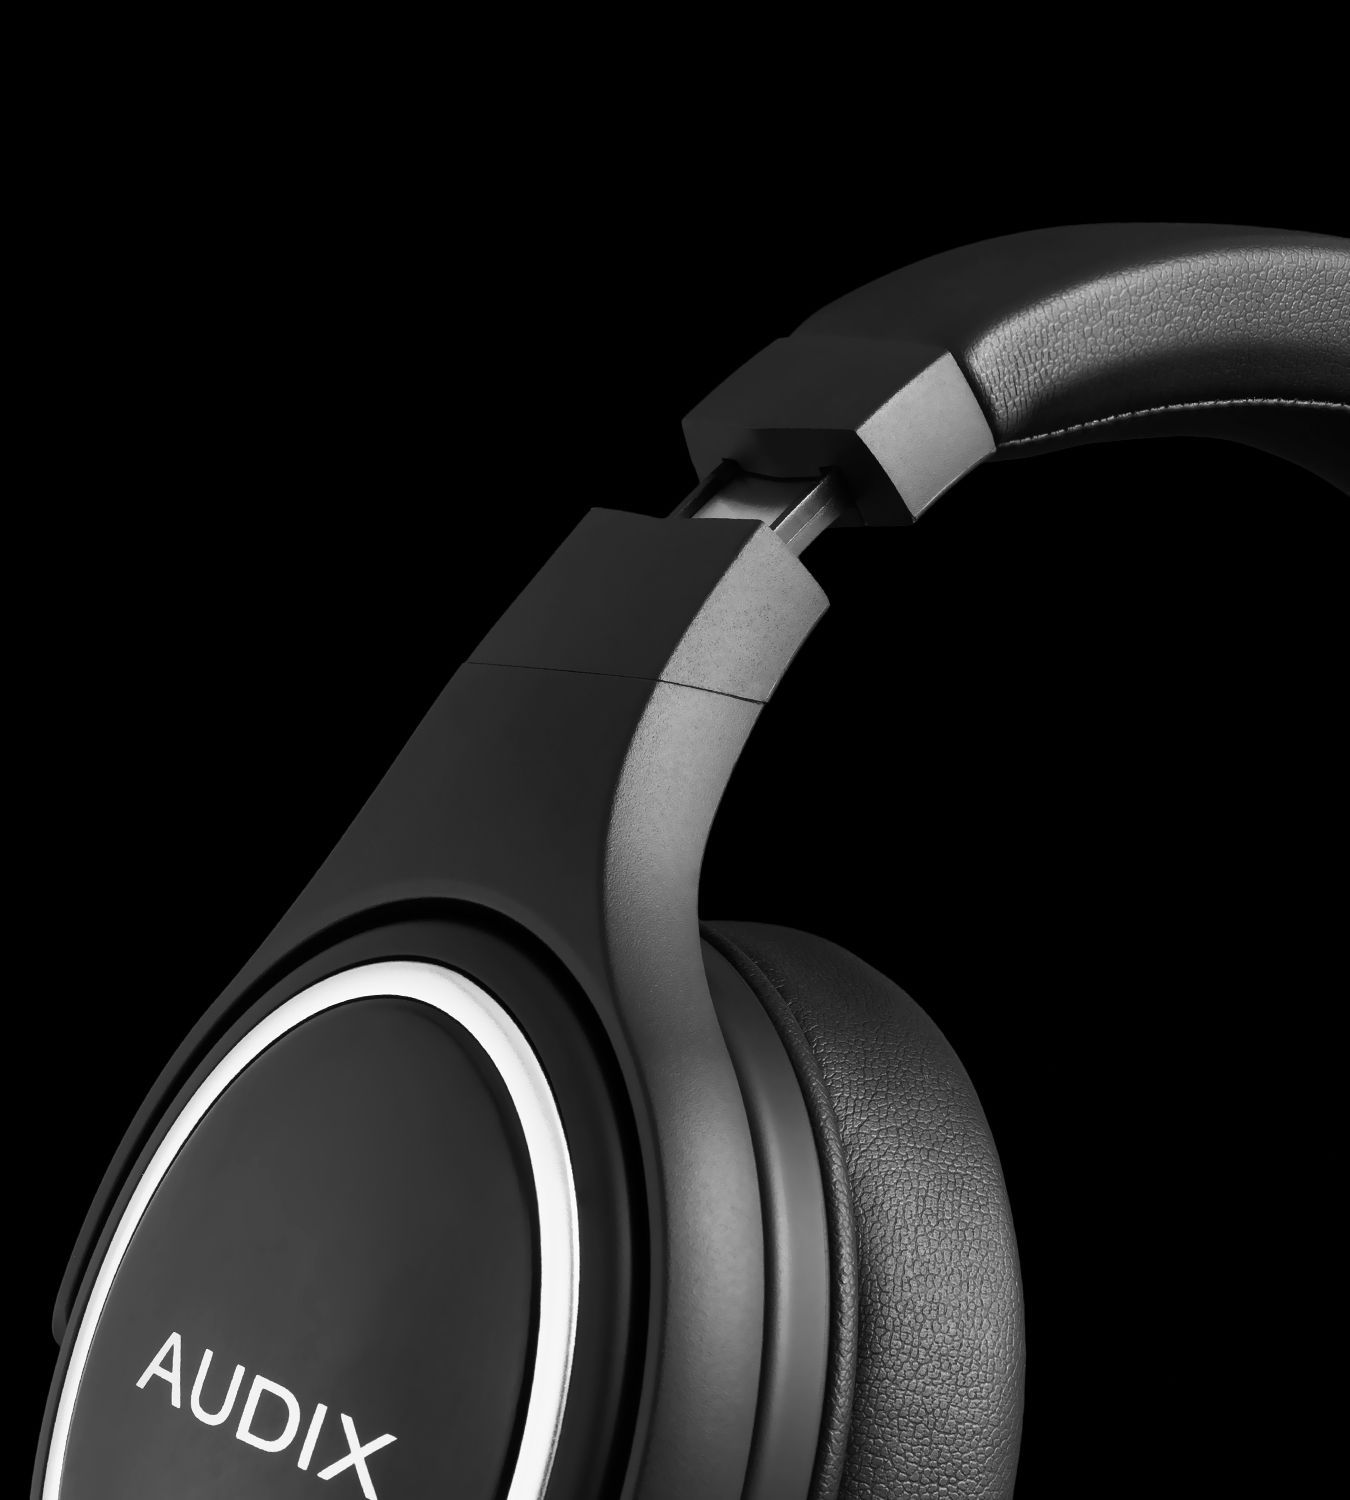 Audix A150 Kopfhörer Professioneller geschlossener Studio-Referenz-Kopfhörer